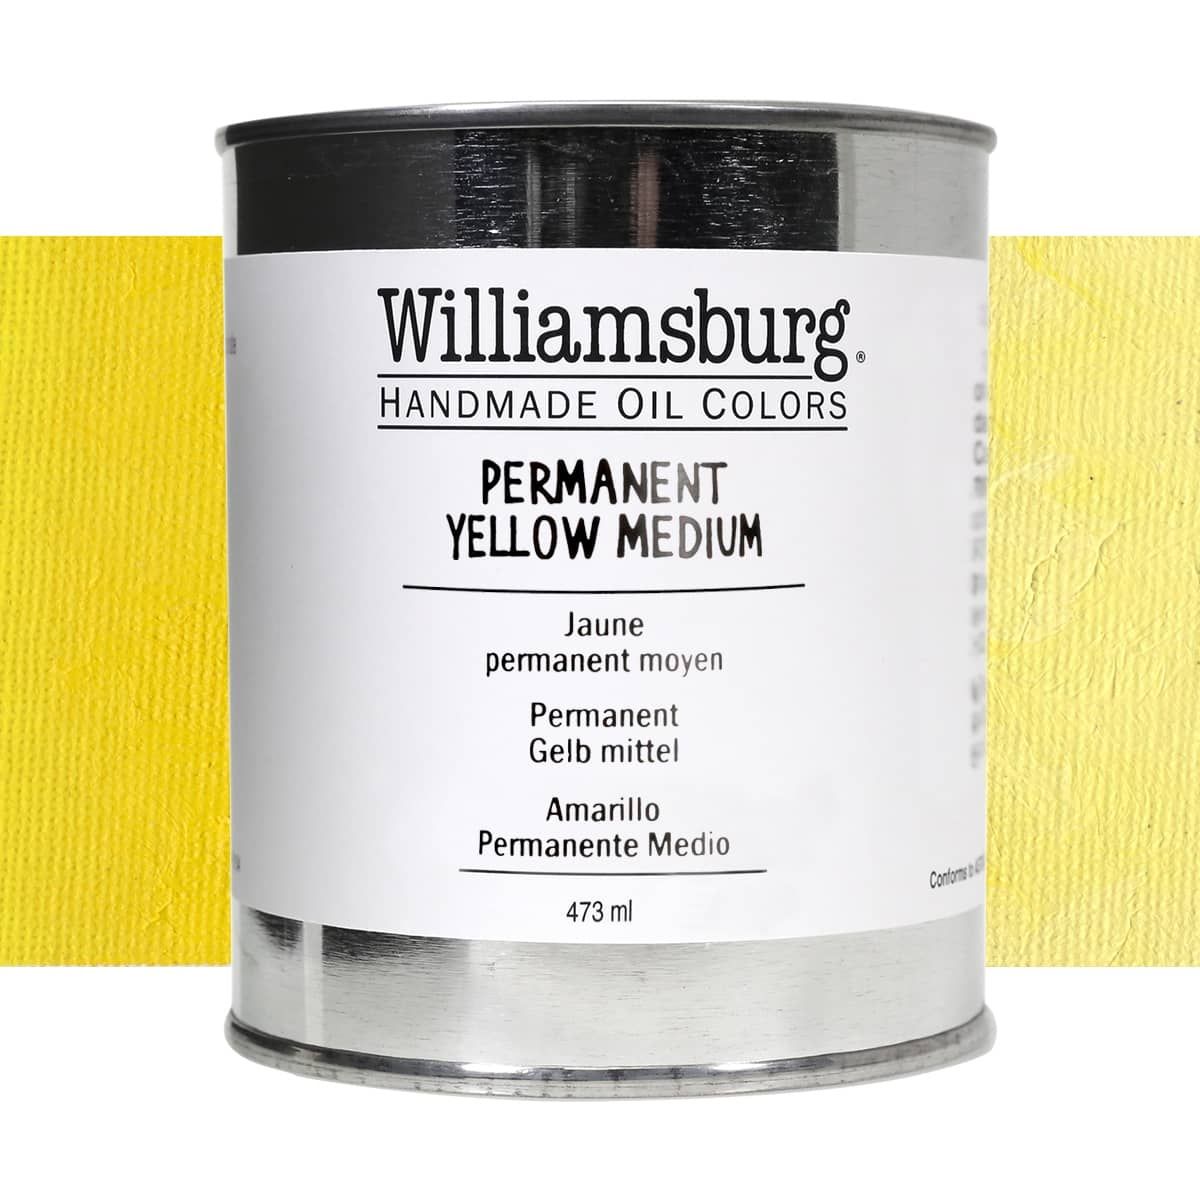 Williamsburg Oil Color 473 ml Can Permanent Yellow Medium